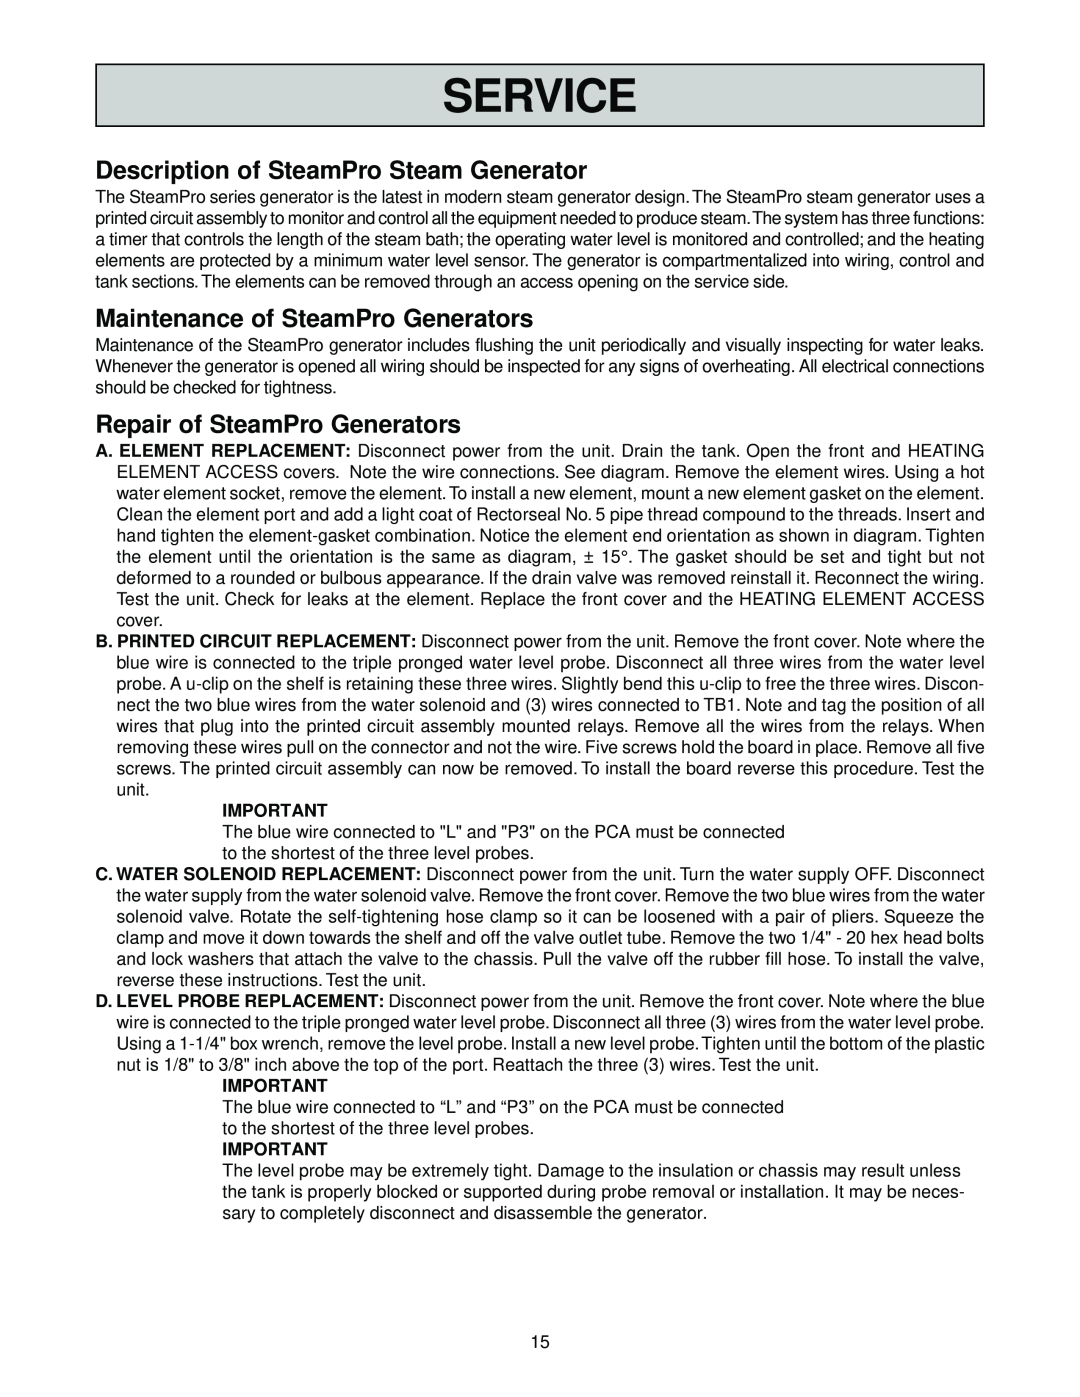 Jacuzzi manual Service, Description of SteamPro Steam Generator, Maintenance of SteamPro Generators 